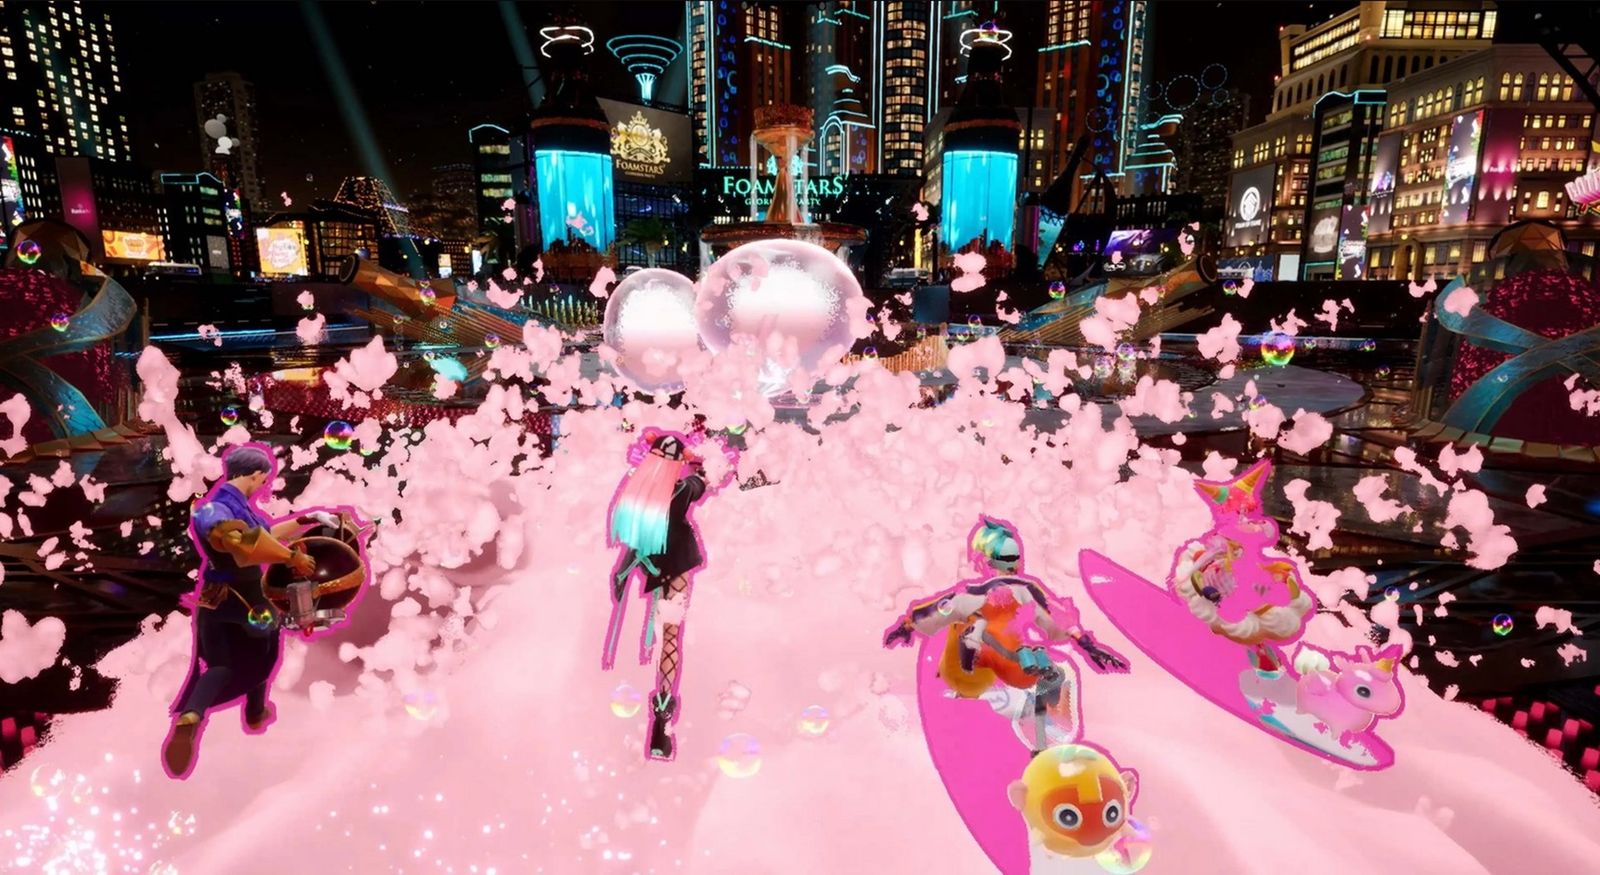 Foamstars characters - characters fighting in pink foam